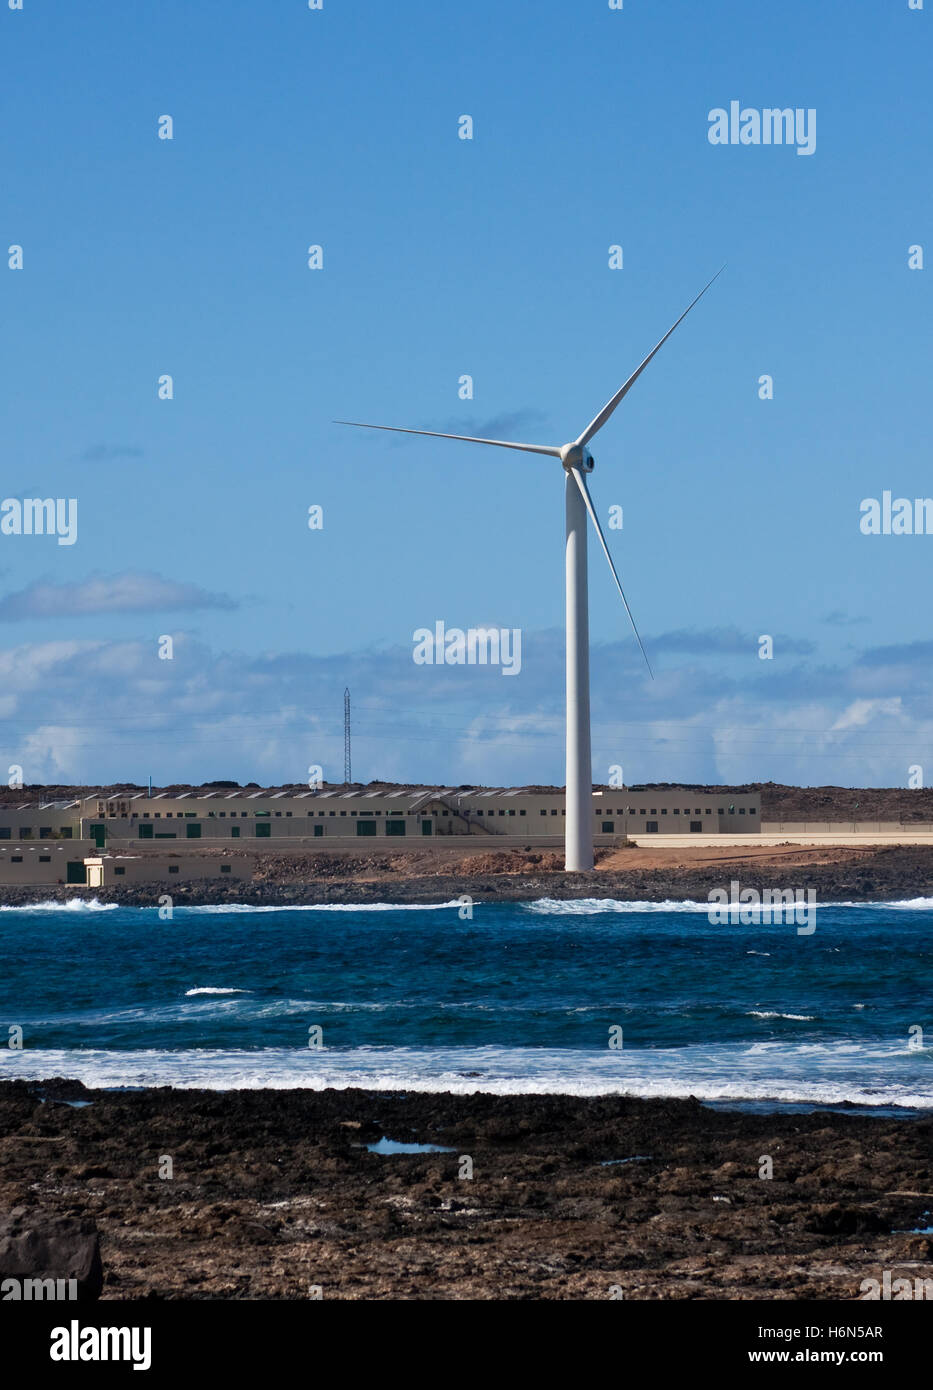 wind energy on sea Stock Photo